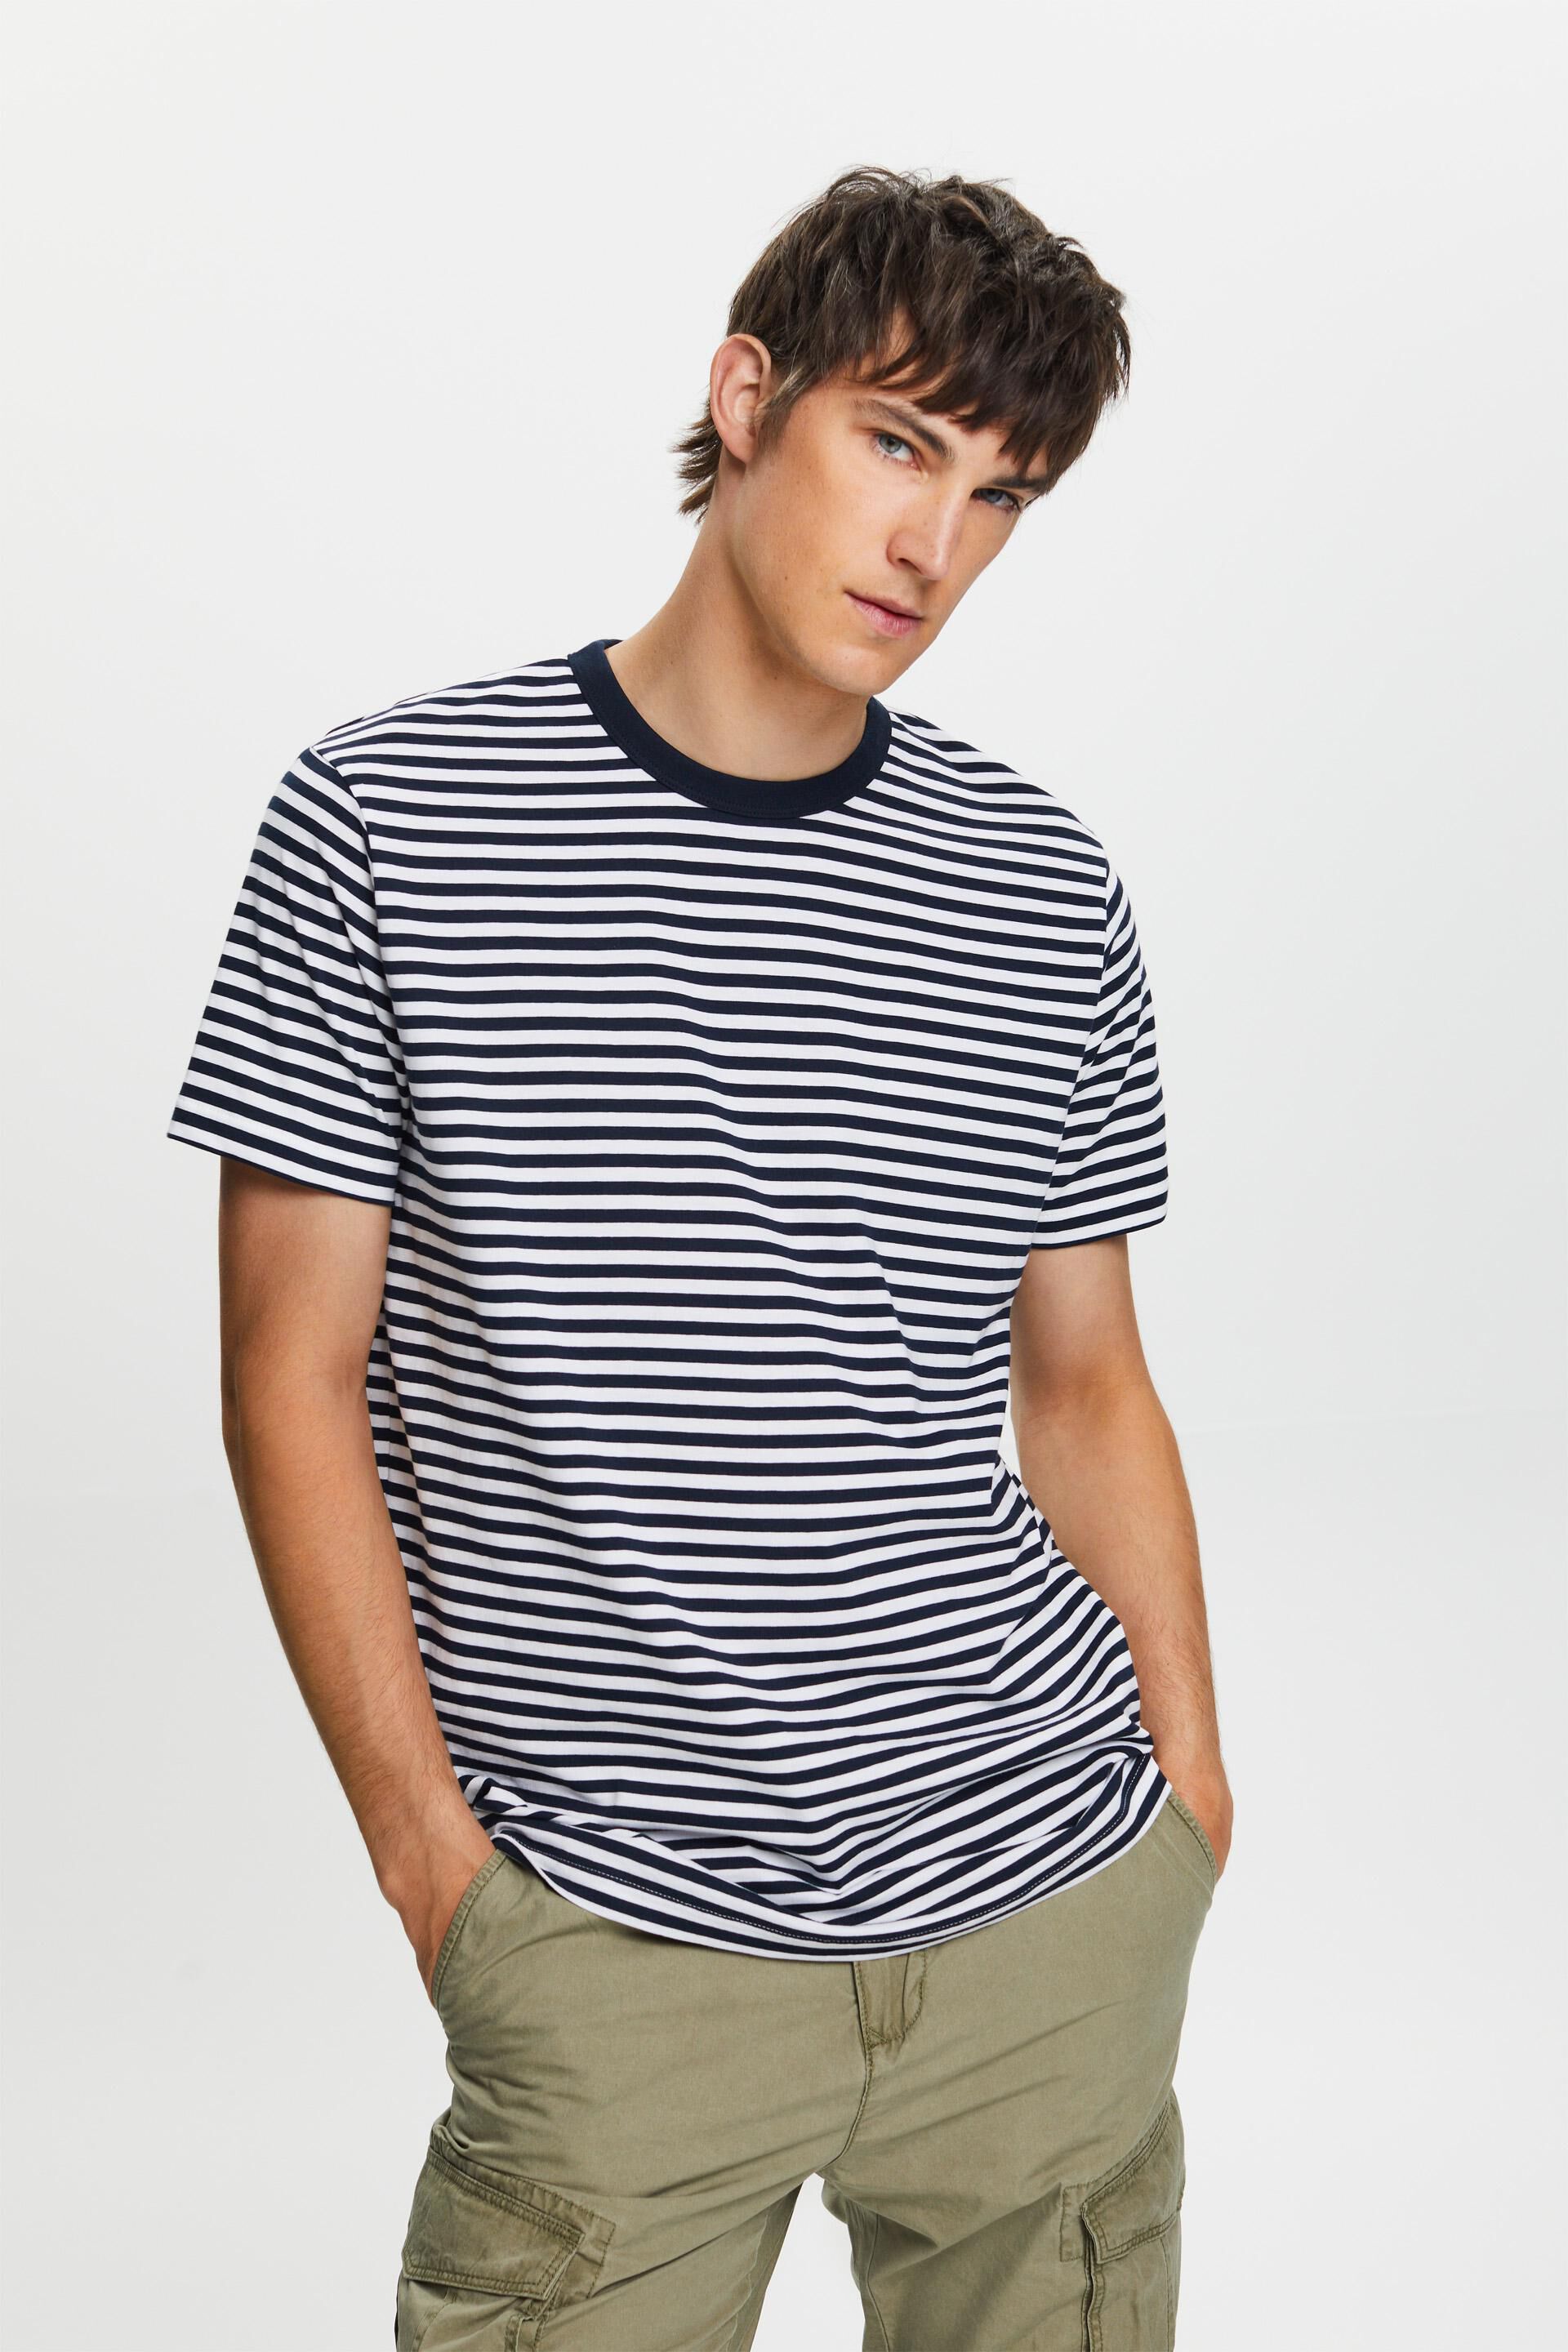 Esprit 100% T-shirt, cotton jersey Striped